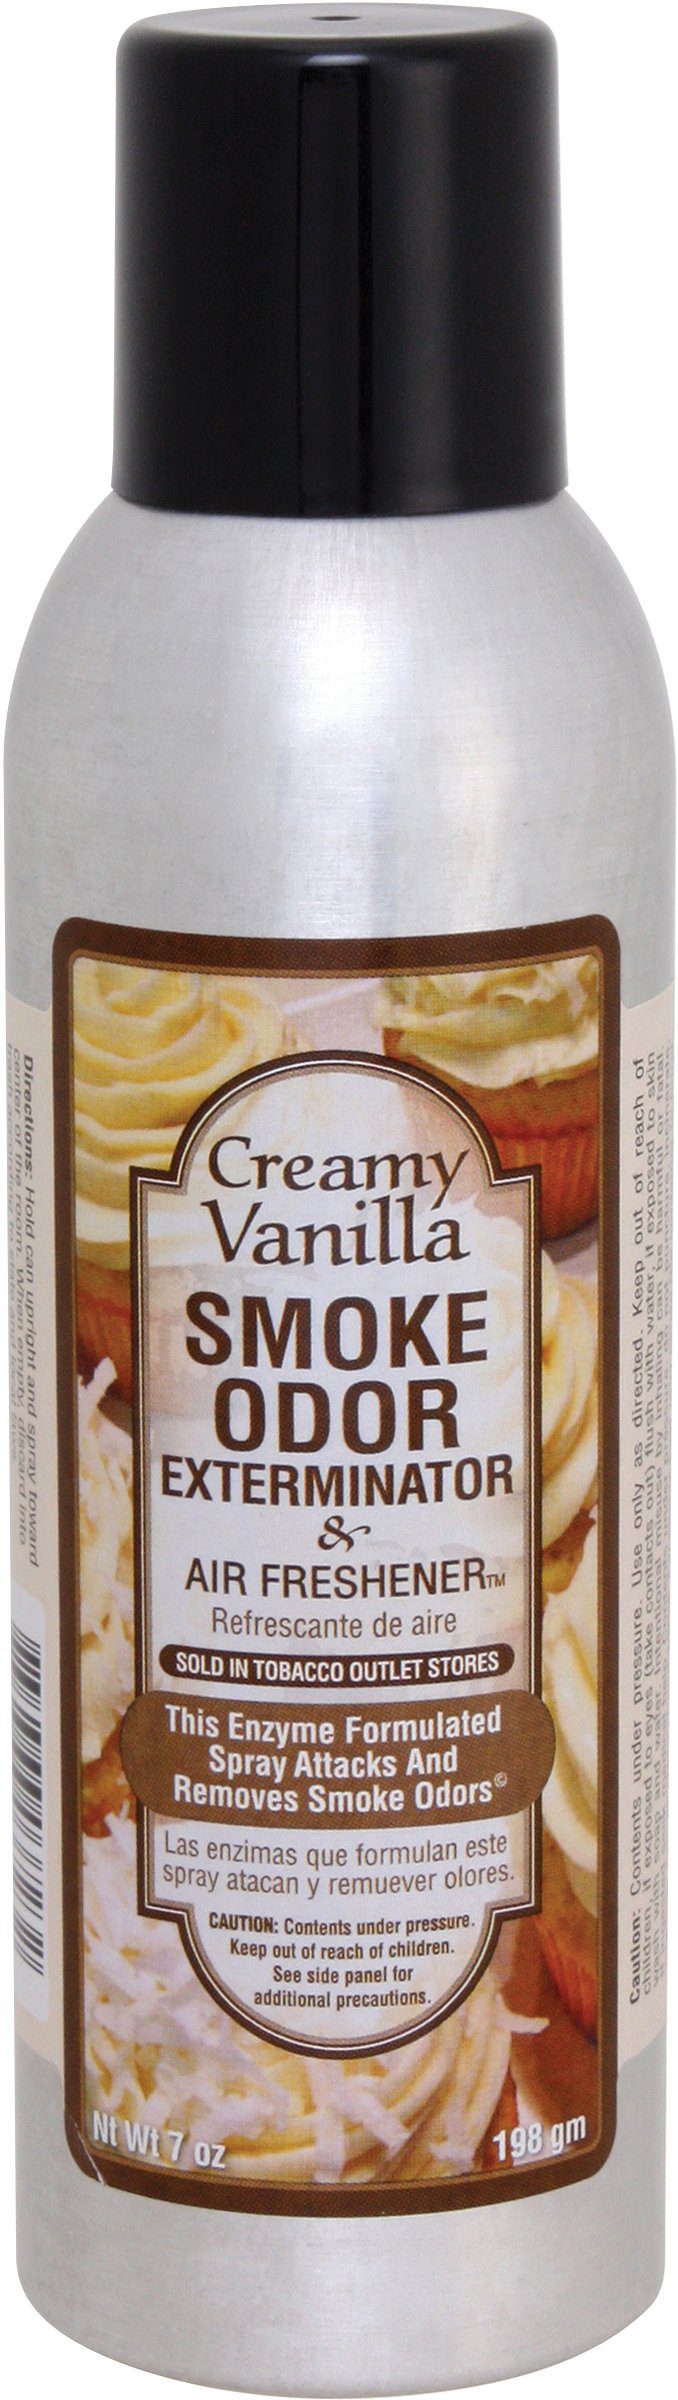 smoke odor exterminator spray bottle creamy vanilla